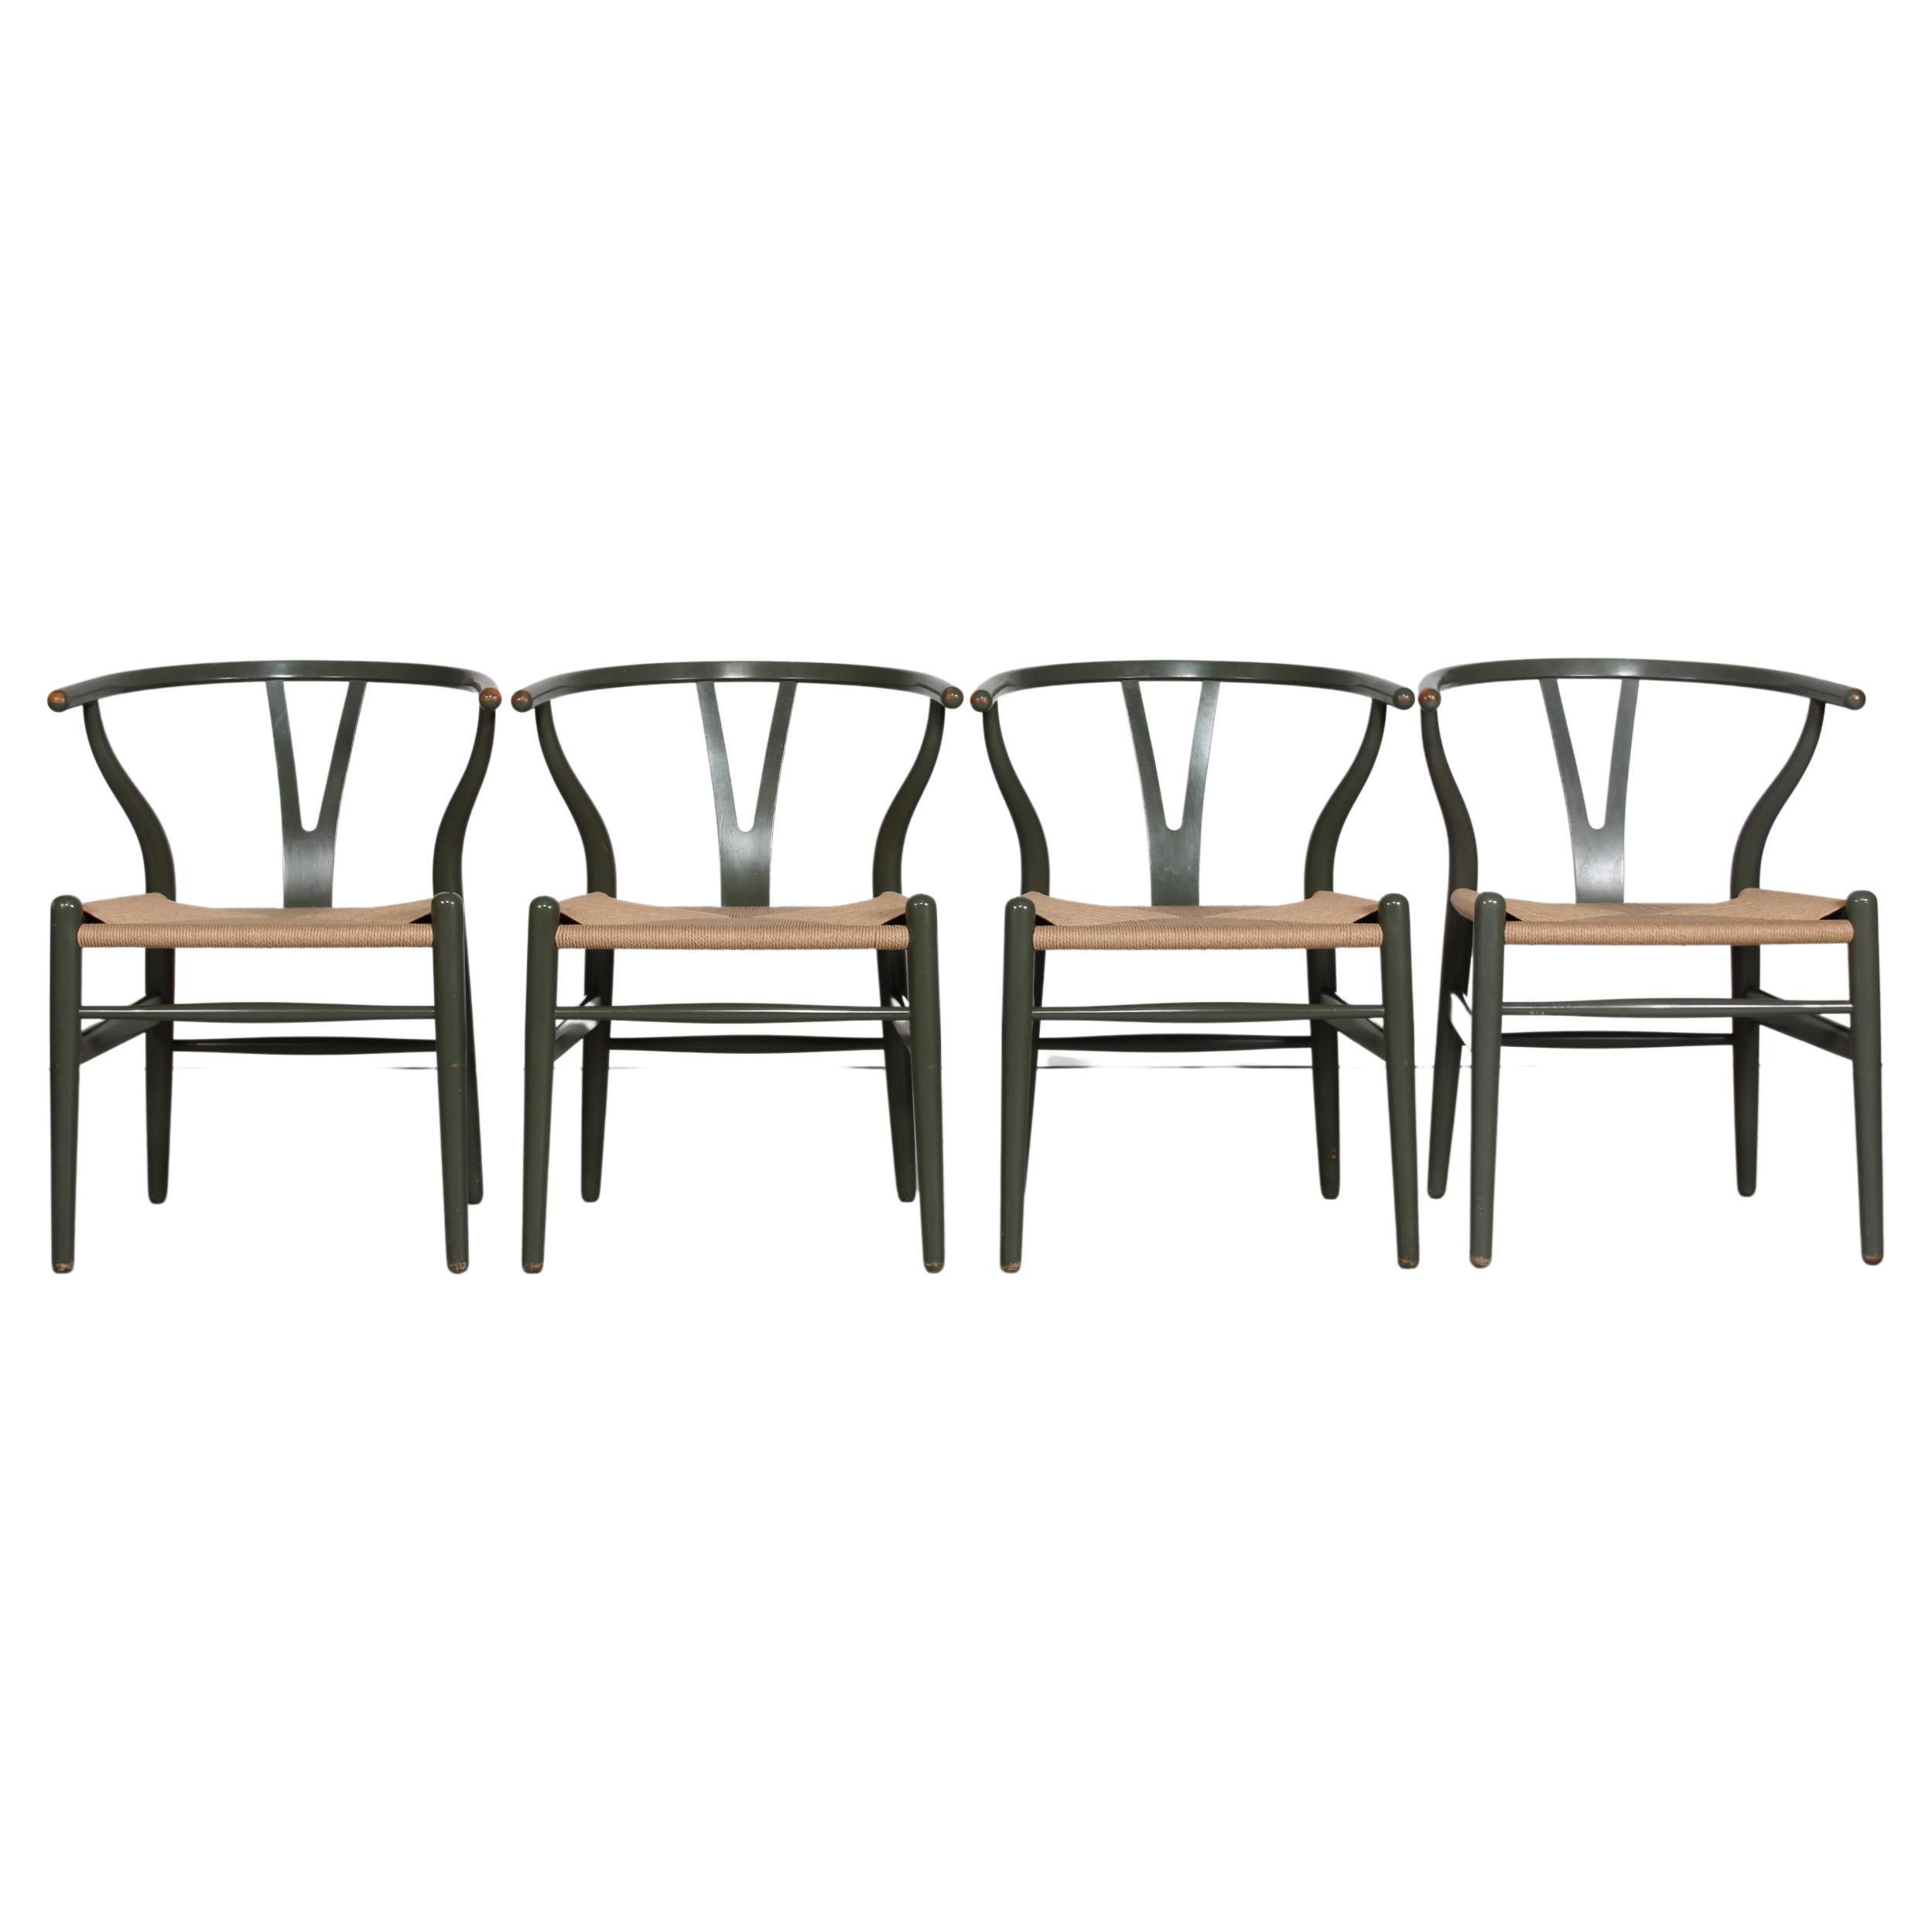 H. J. Wegner Set of 4 Wishbone Chairs CH 24, Green by Carl Hansen & Son, 1970s